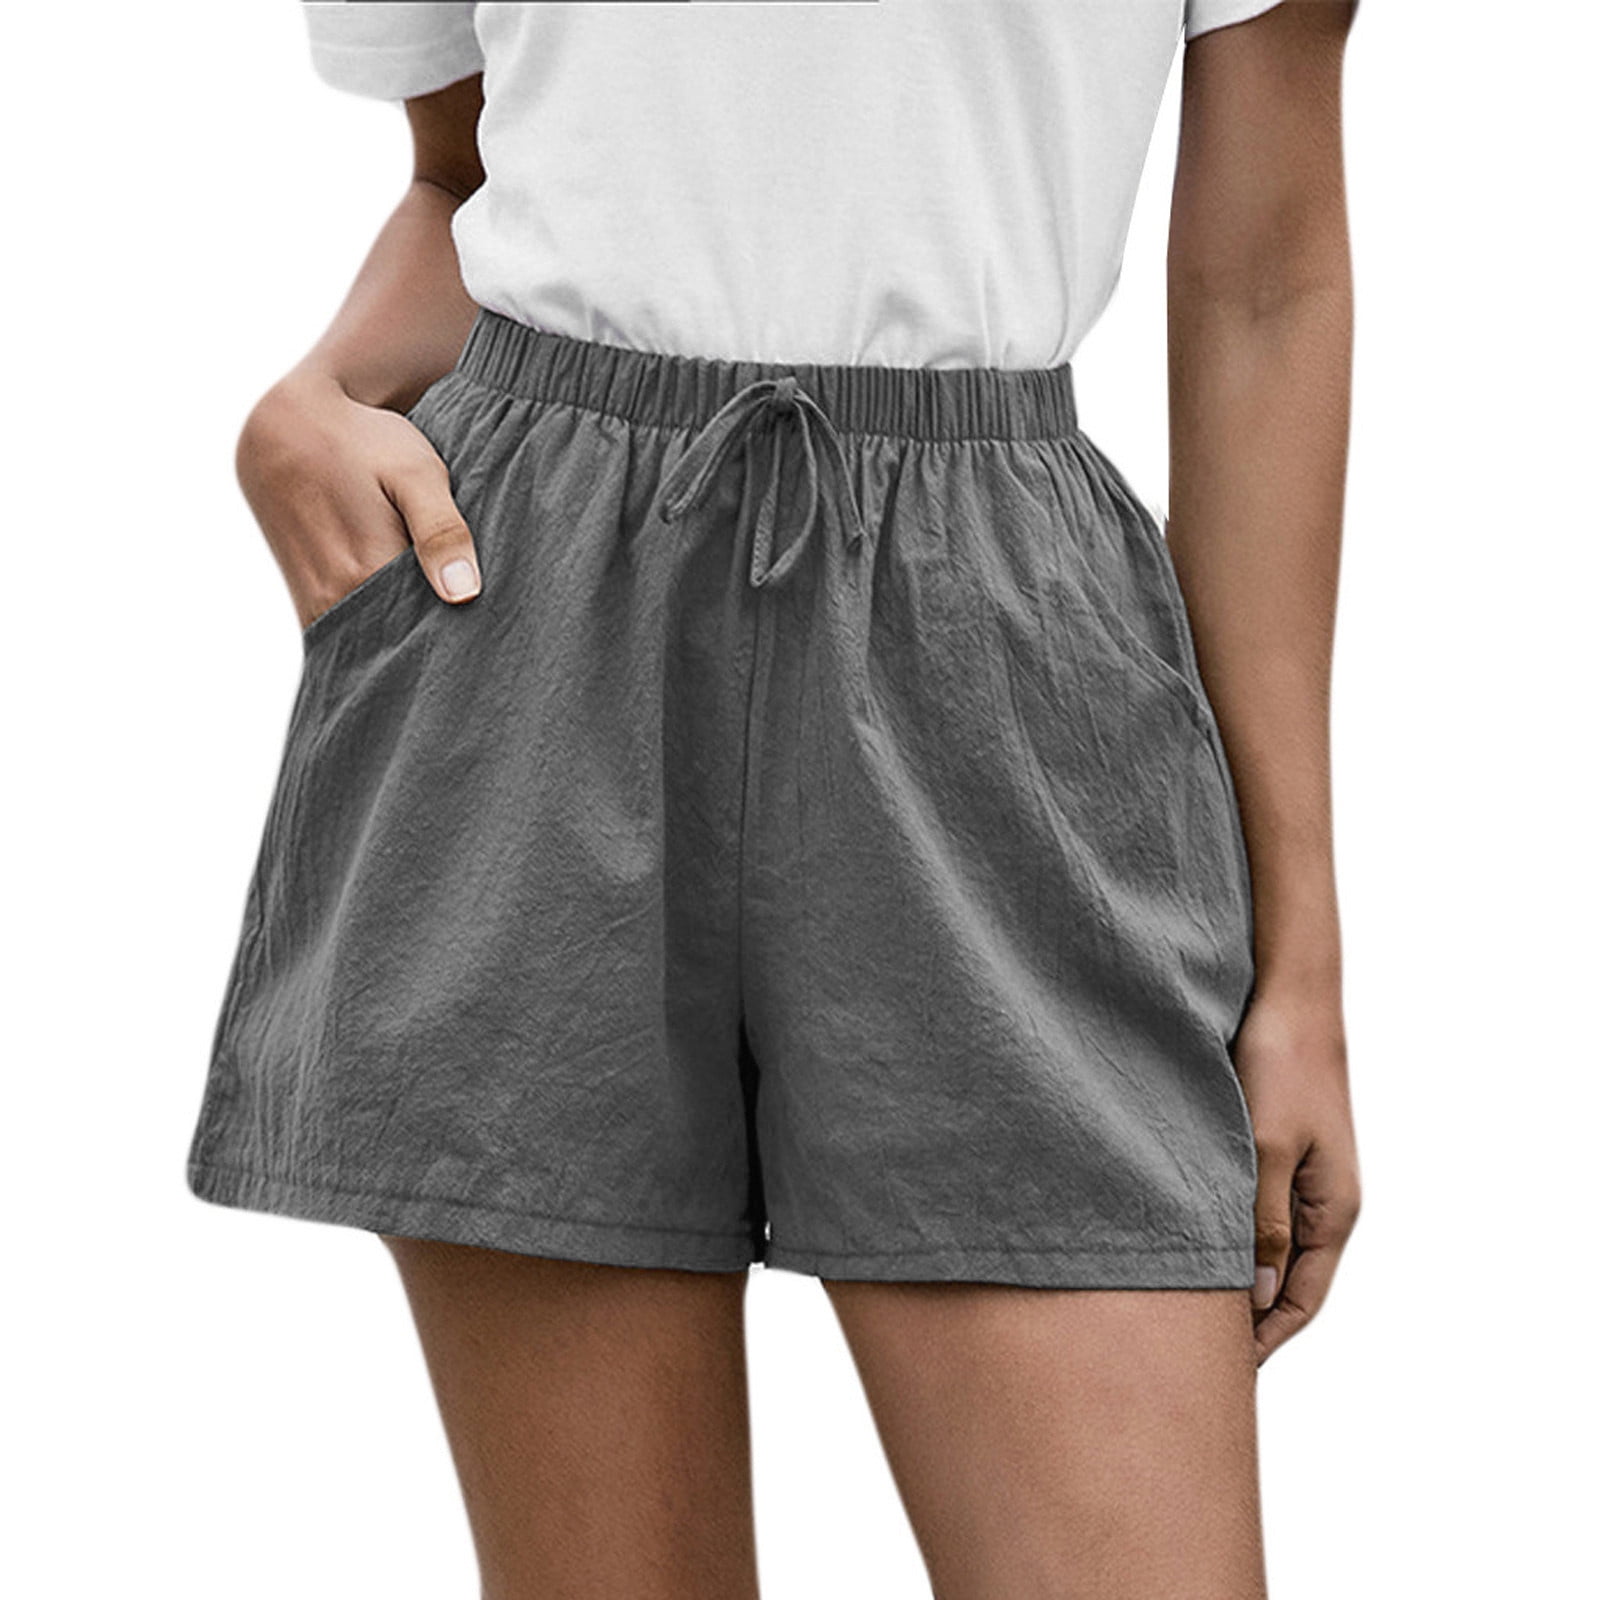 qucoqpe Womens Shorts Casual Drawstring Elastic Waist Cotton Shorts ...